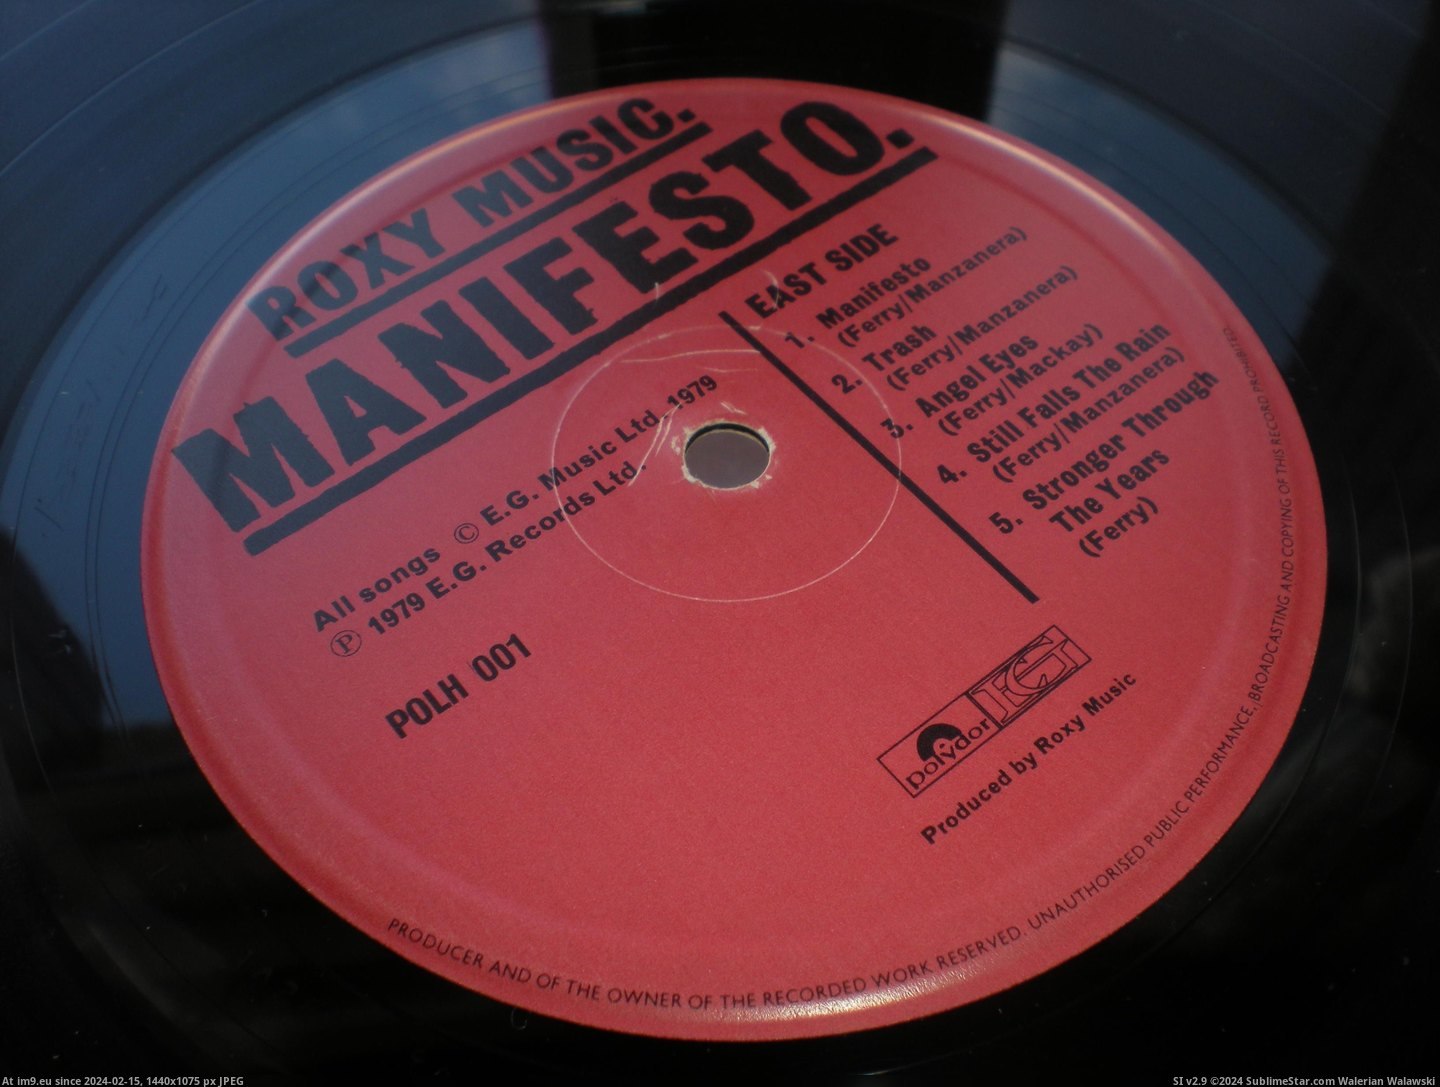  #Manifesto  Manifesto 2 Pic. (Bild von album new 1))